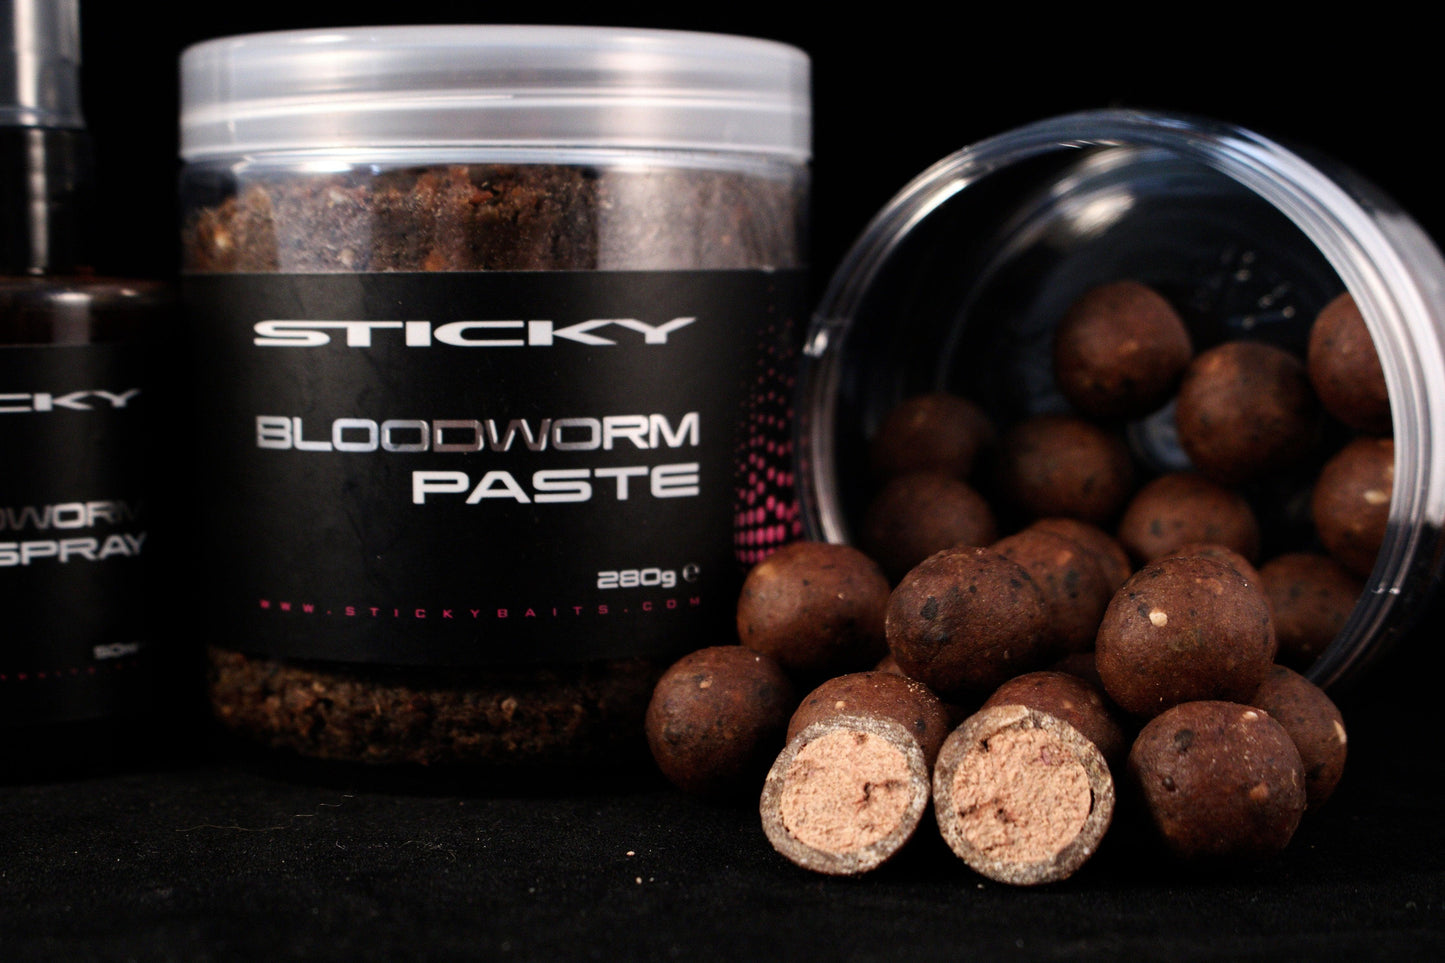 'Sticky's Bloodworm' corkballs - Forgotten Flavours